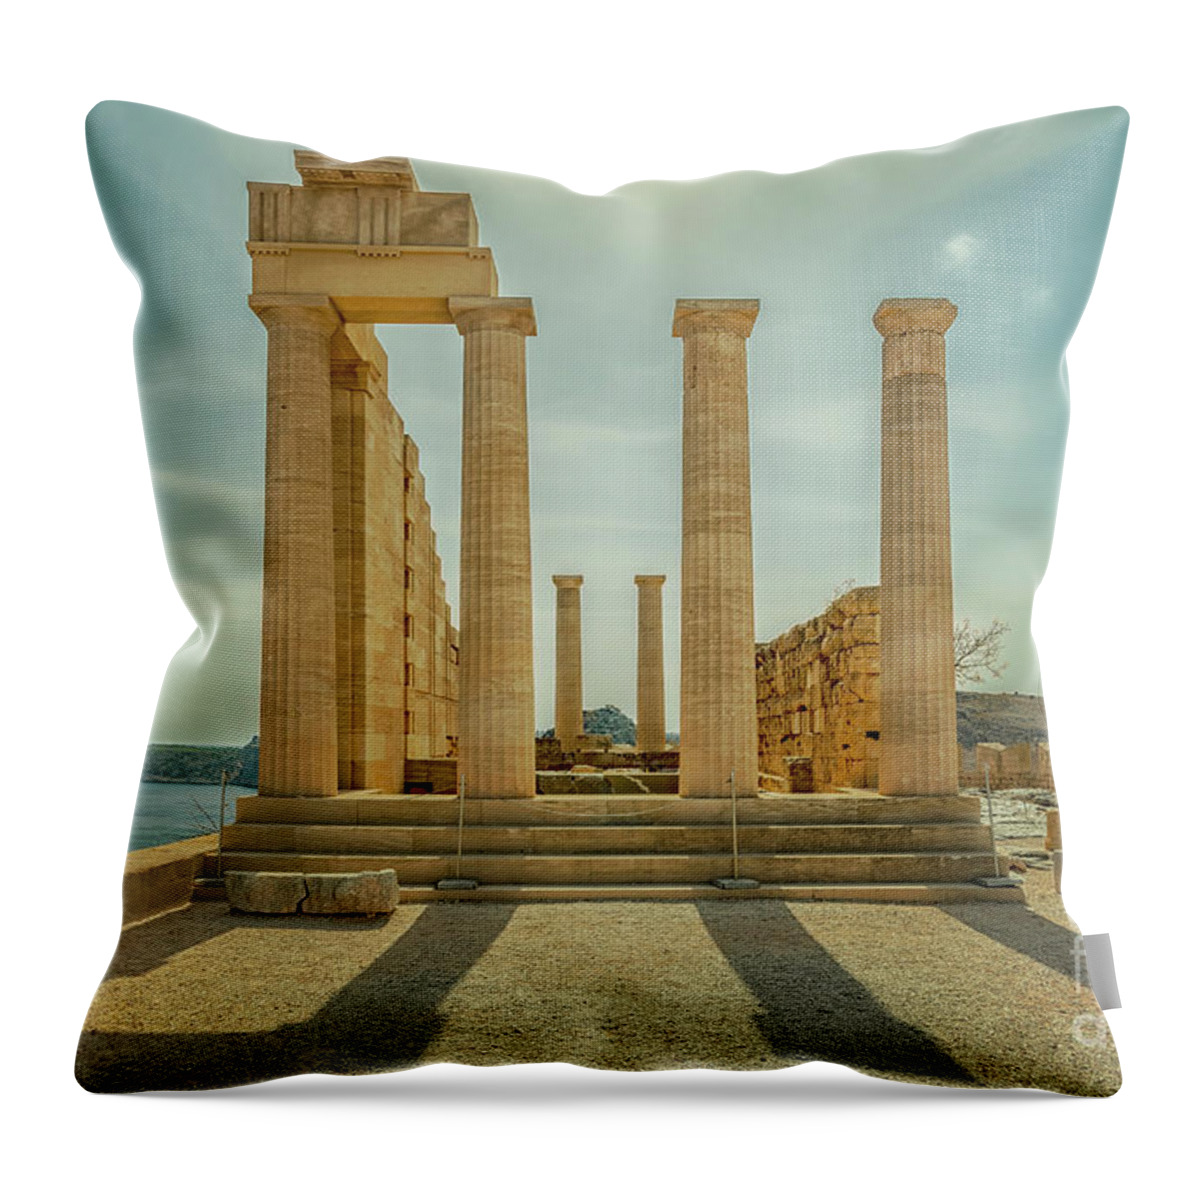 Greece Throw Pillow featuring the photograph Rhodes Lindos Acropolis Temple Ruins by Antony McAulay